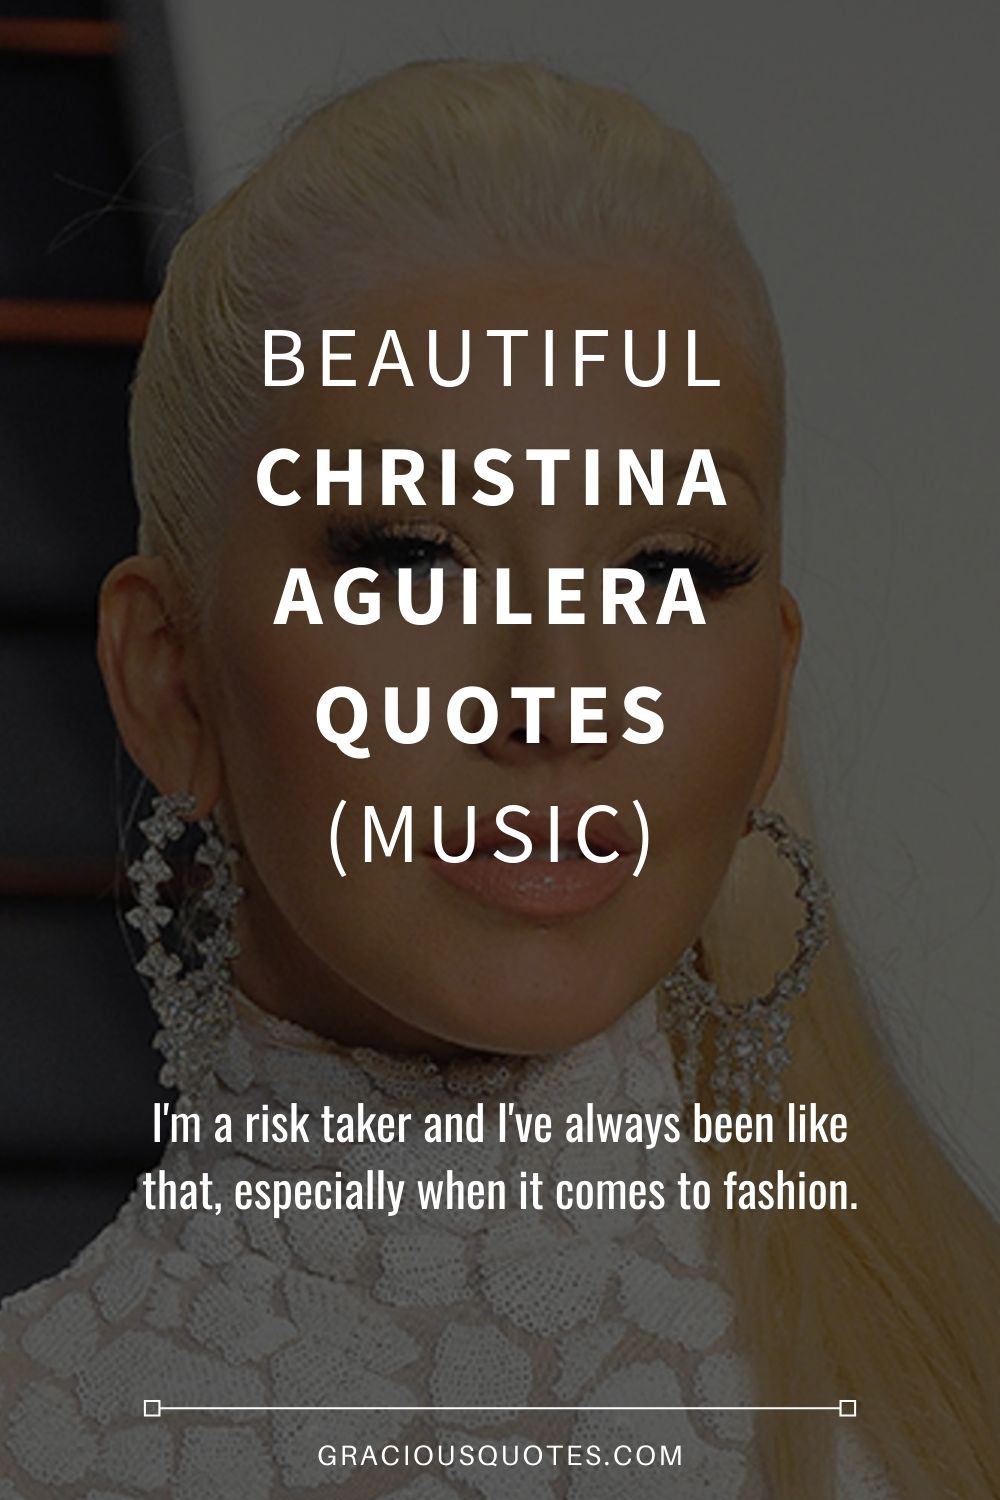 christina aguilera quotes about life